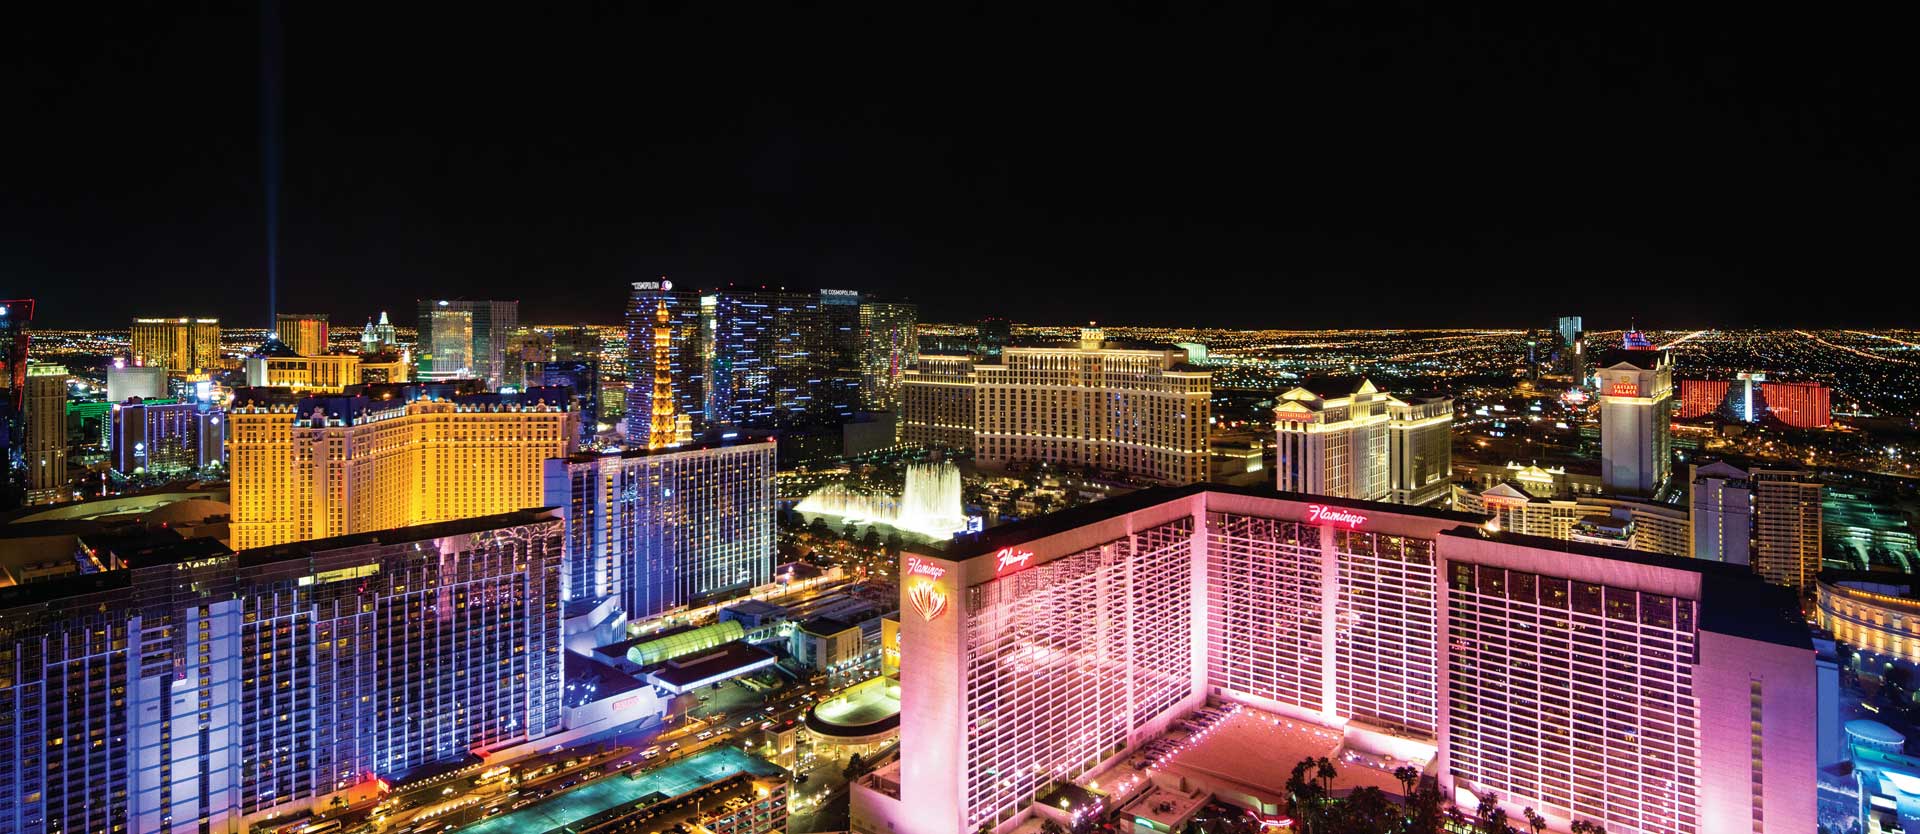 The 5 best Las Vegas casinos